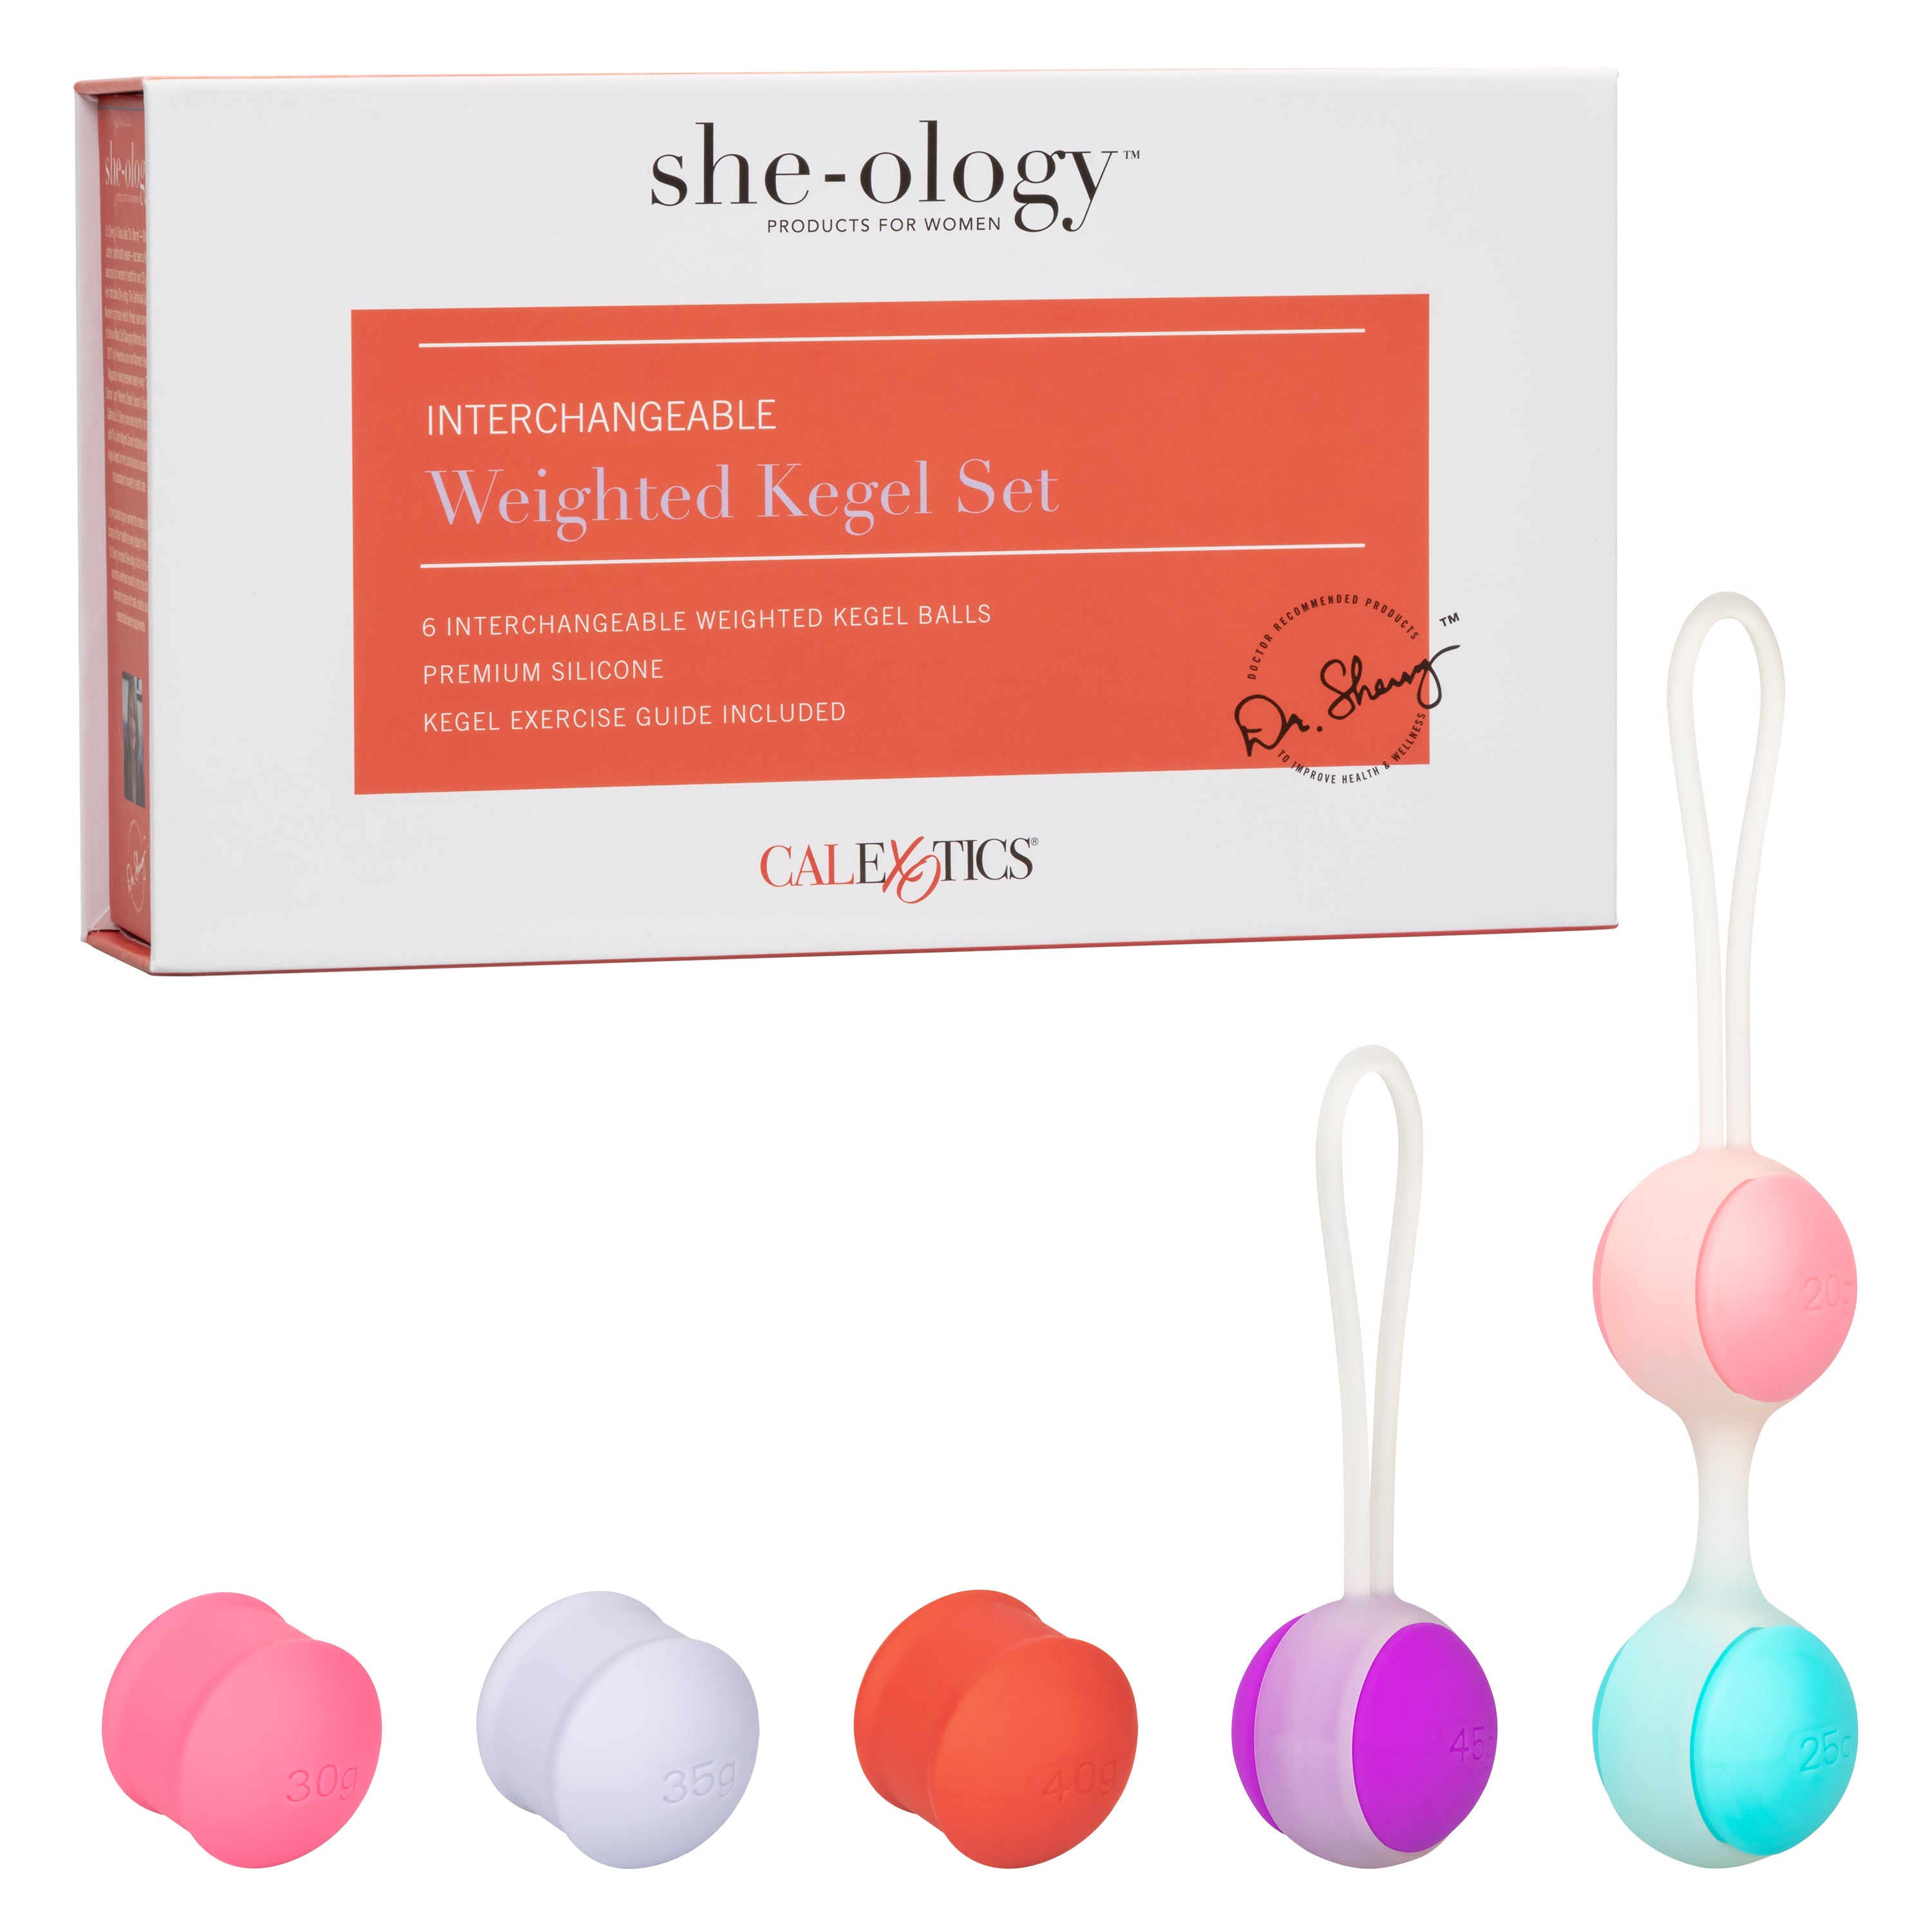 she-ology she-ology Products Wellness – Interchangeable Kegel Sexual Set